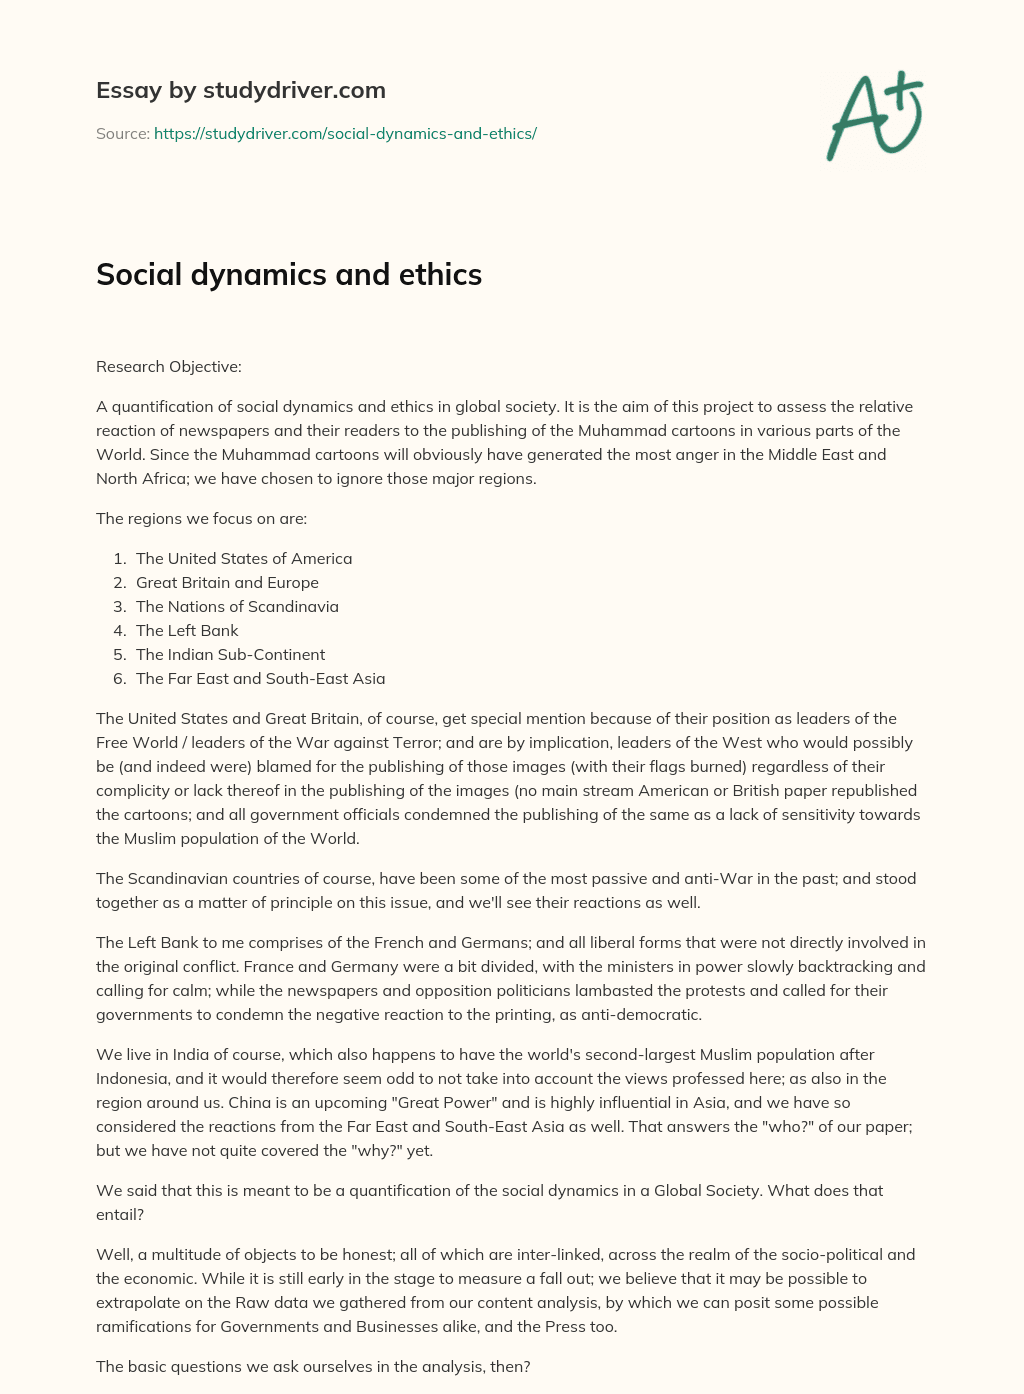 Social Dynamics and Ethics essay